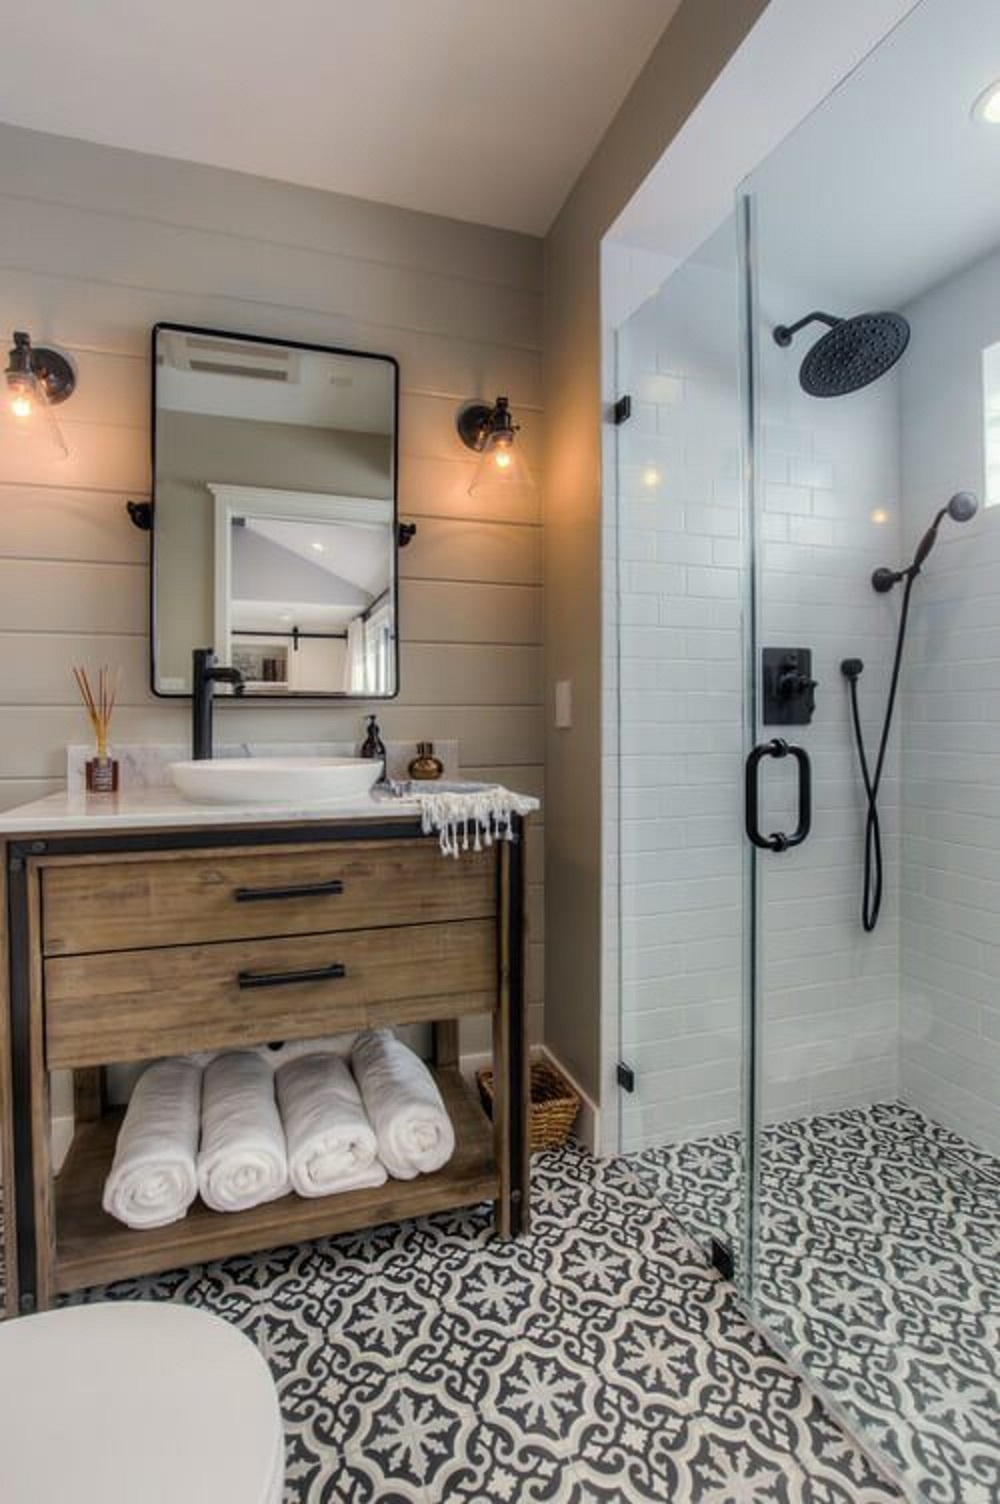 van10 Neat corner bathroom vanity ideas that you find useful